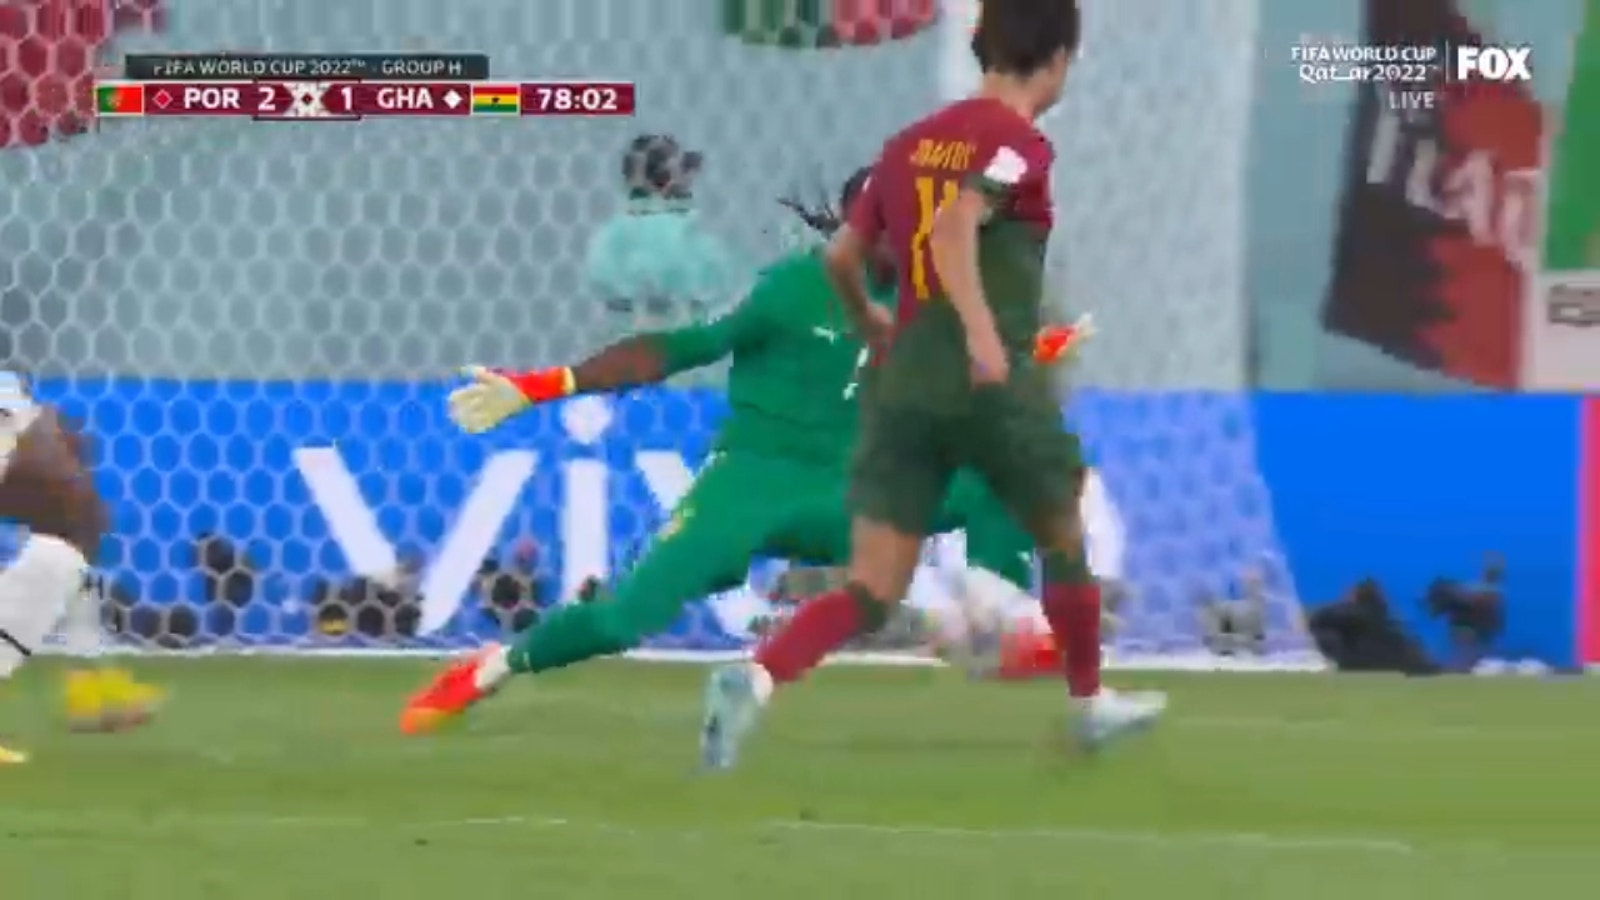 Portugal's Joao Felix scores a goal against Ghana